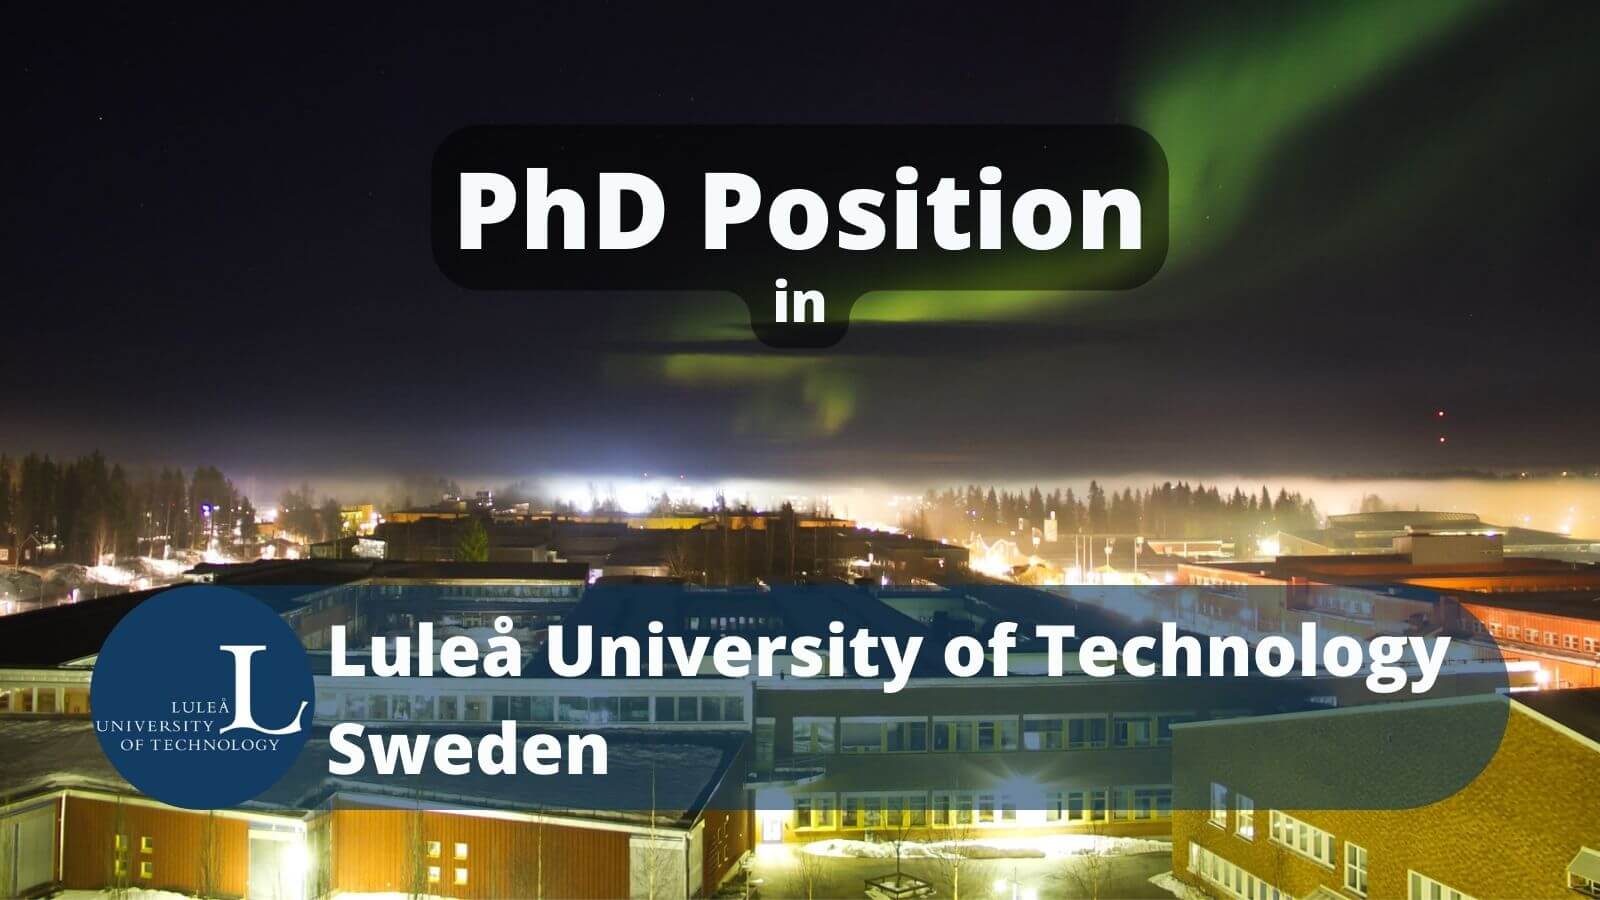 PhD Position in Luleå University of Technology Sweden